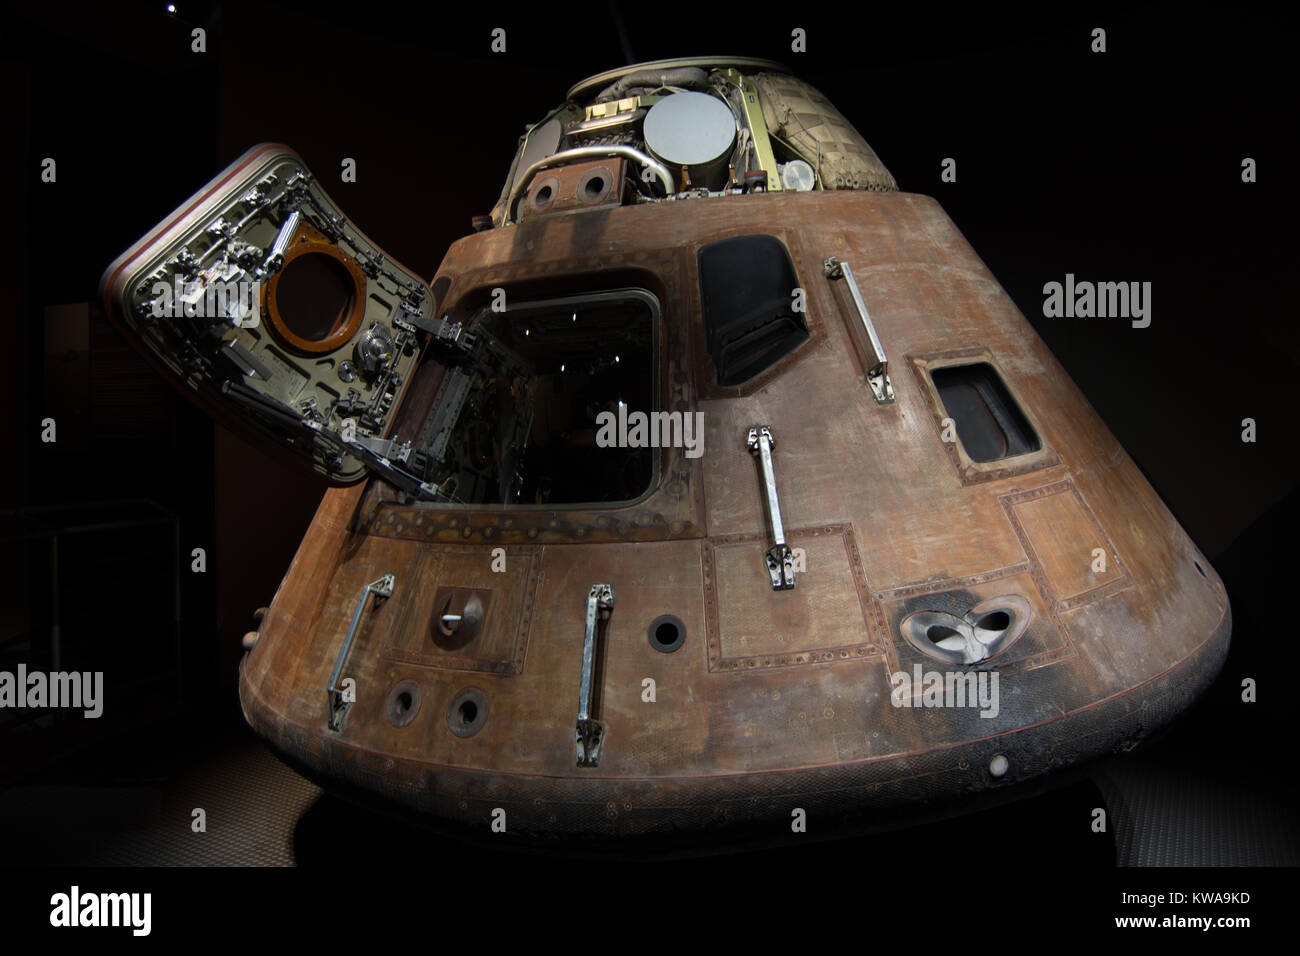 Apollo 14 Command Module Kennedy Space Center Stock Photo